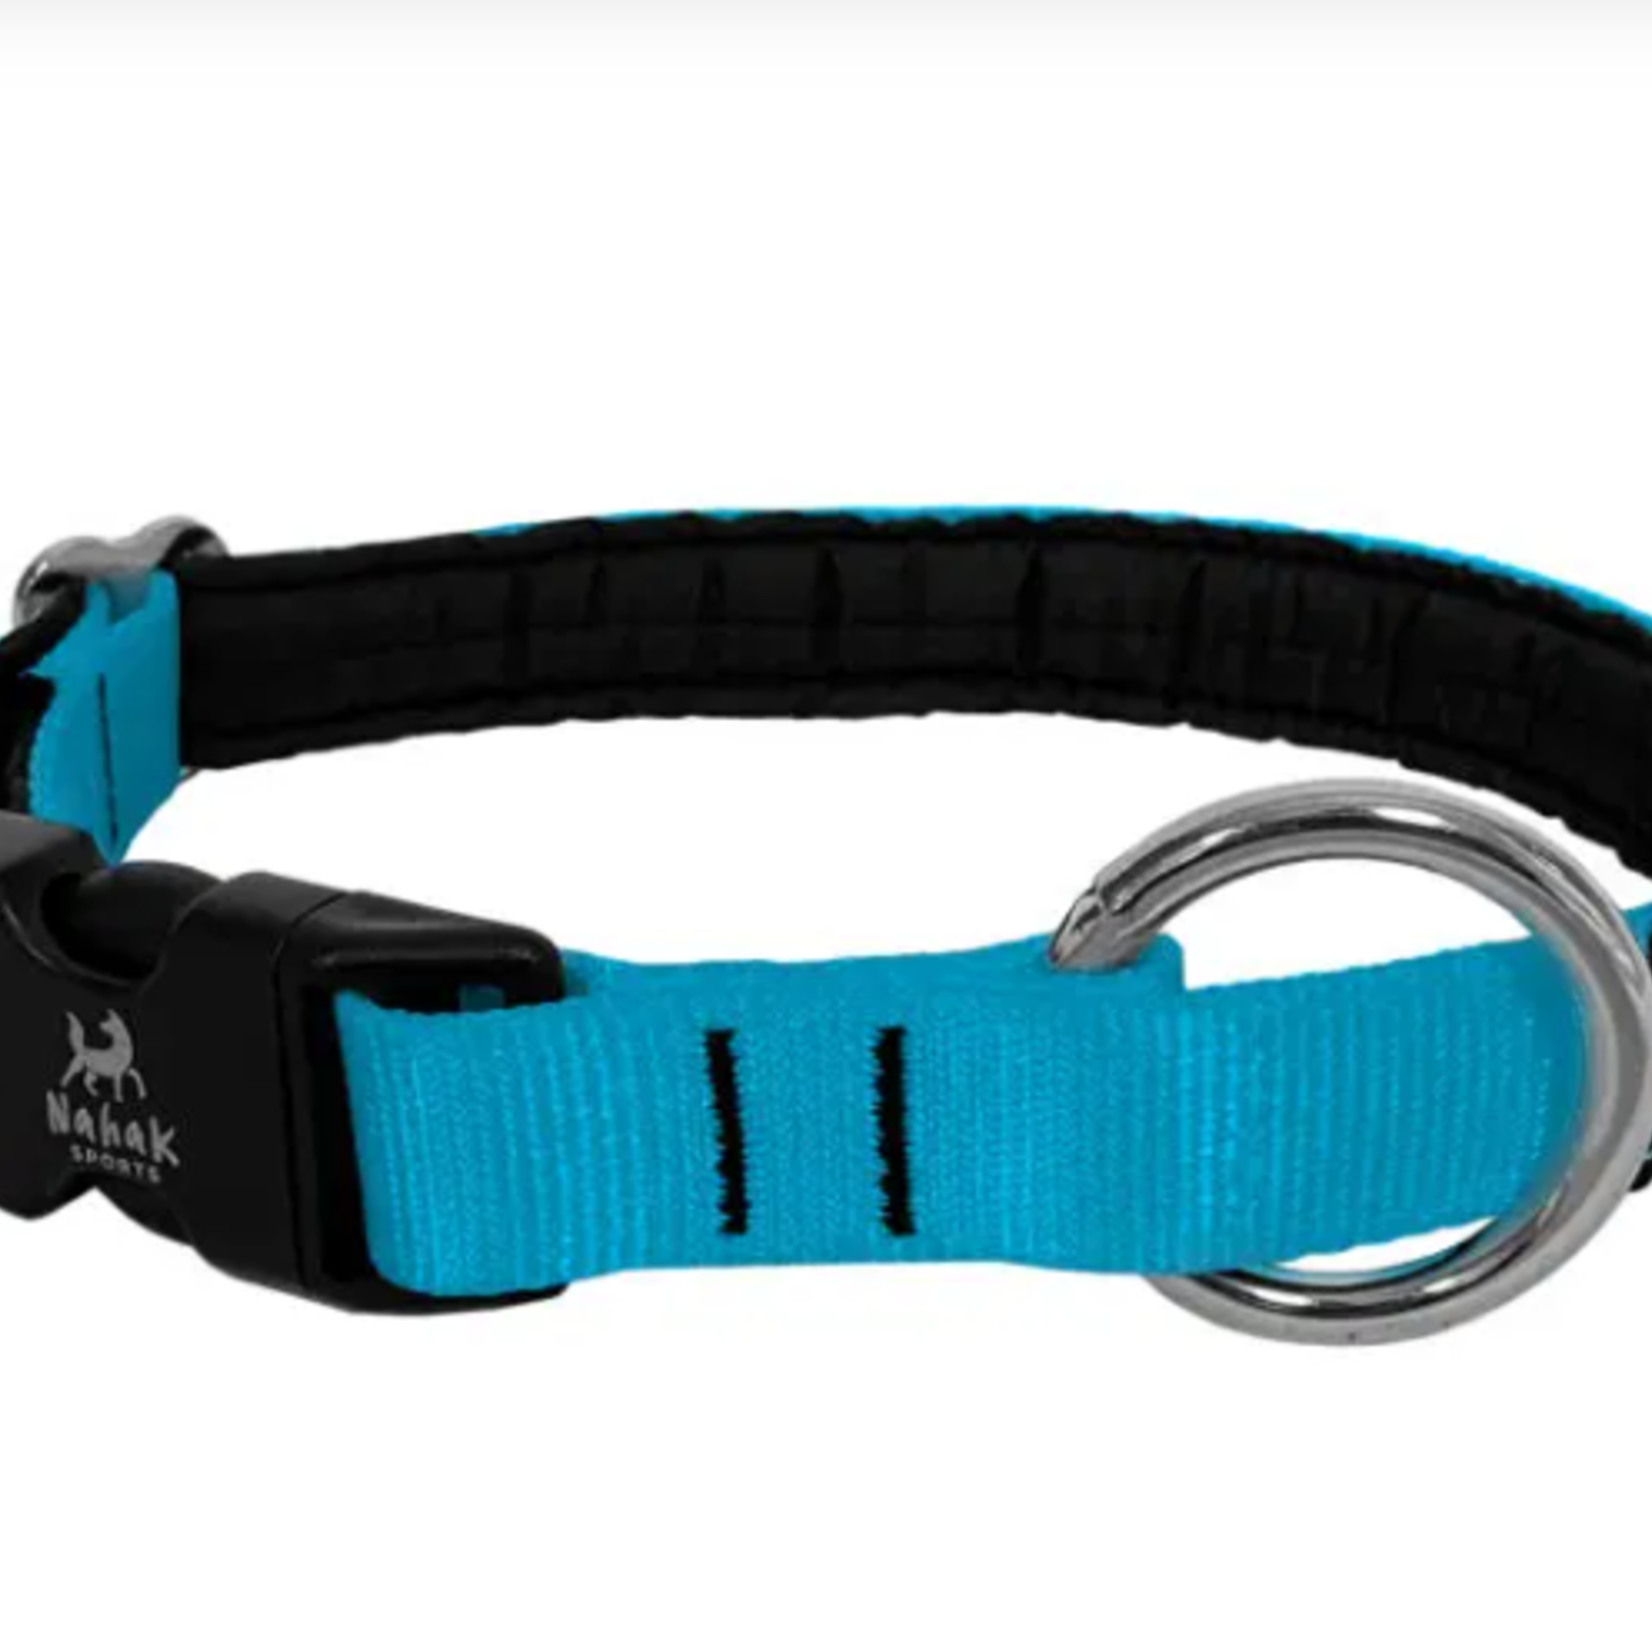 Nahak Padded Dog Collar With Clip